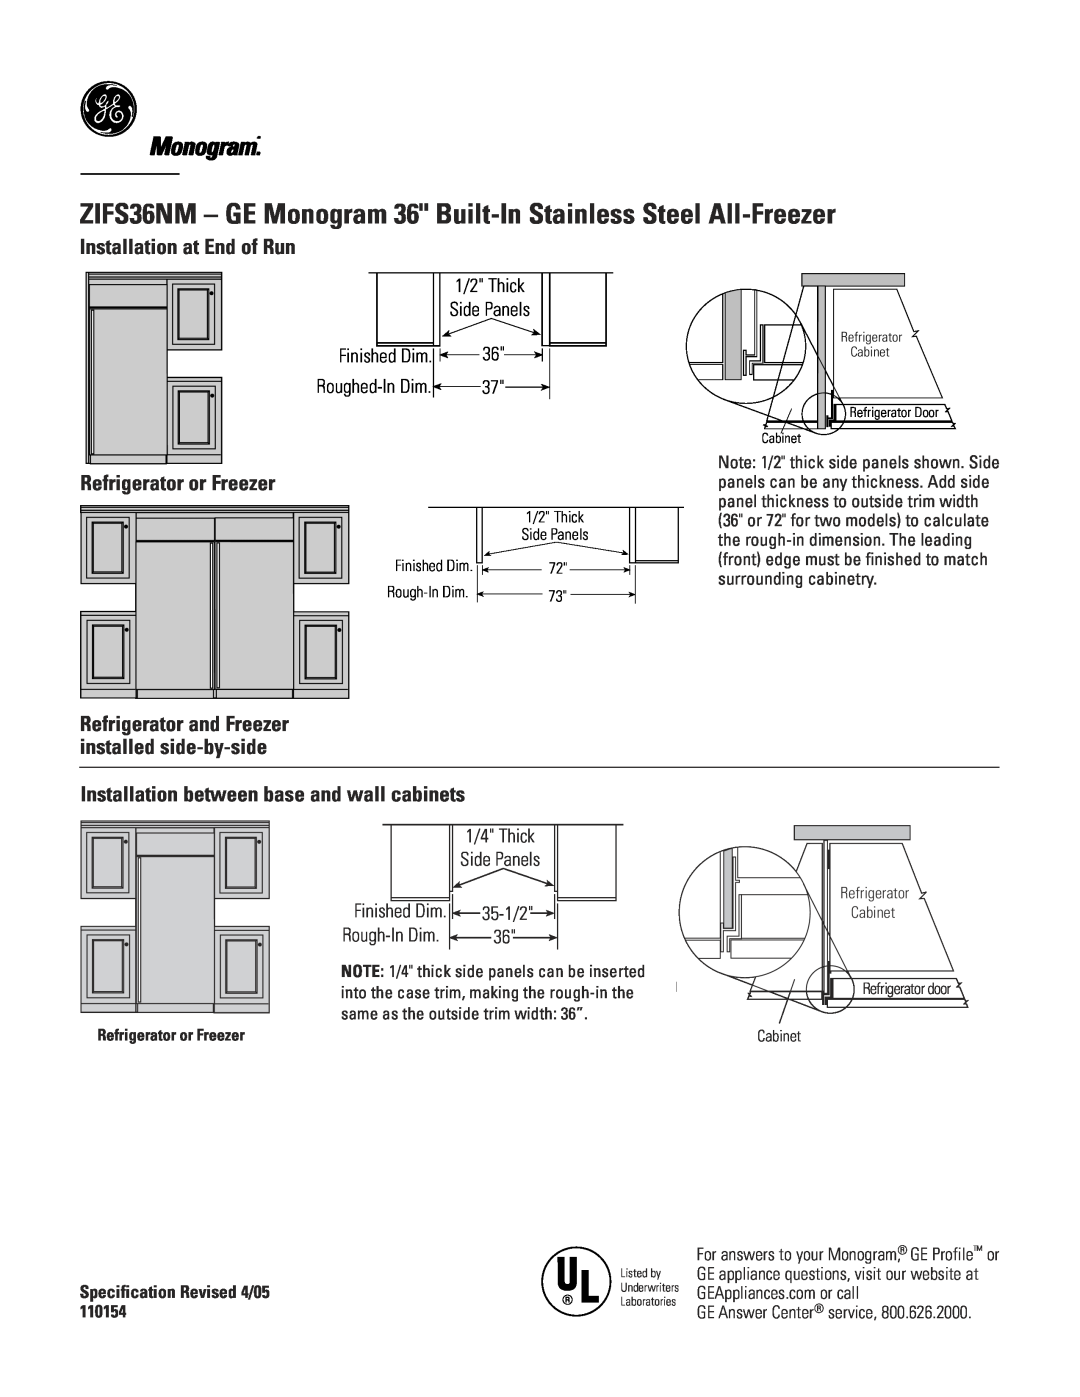 GE Monogram ZIFS36NM Monogram.“, Installation at End of Run, Refrigerator or Freezer, 35-1/2, Rough-InDim, Finished Dim 